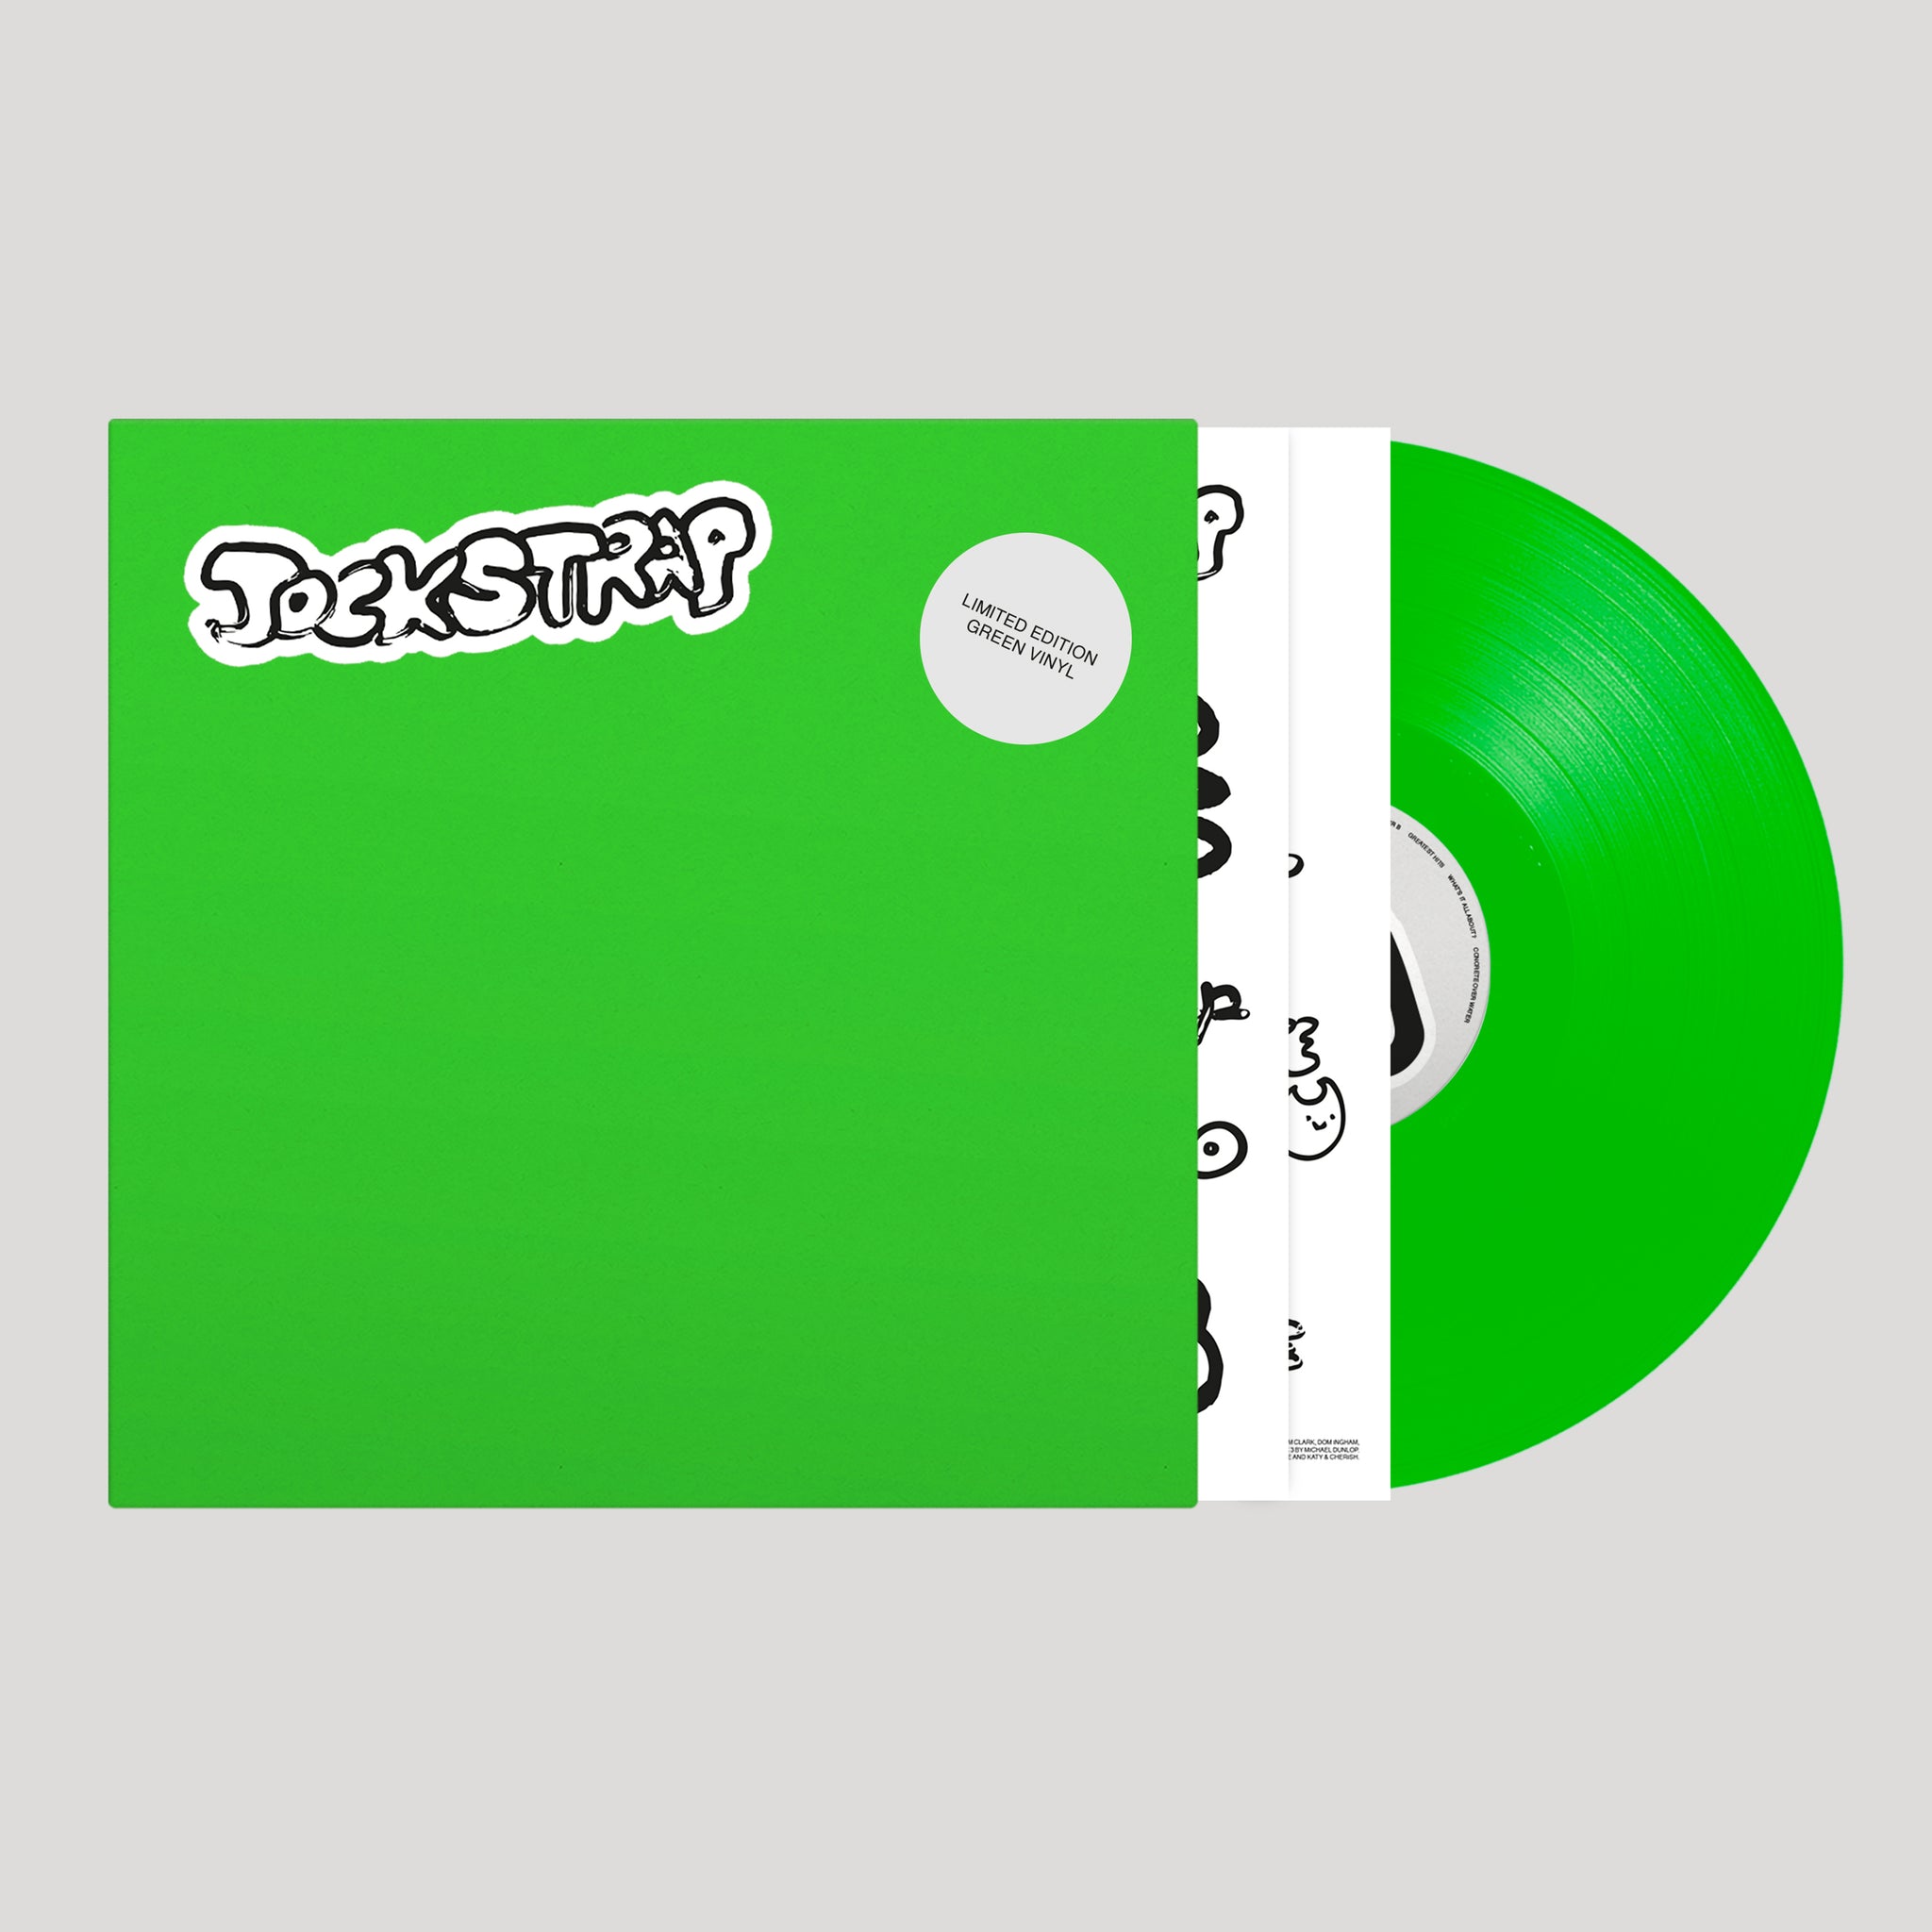 Jockstrap - I Love You Jennifer B (Green Vinyl)